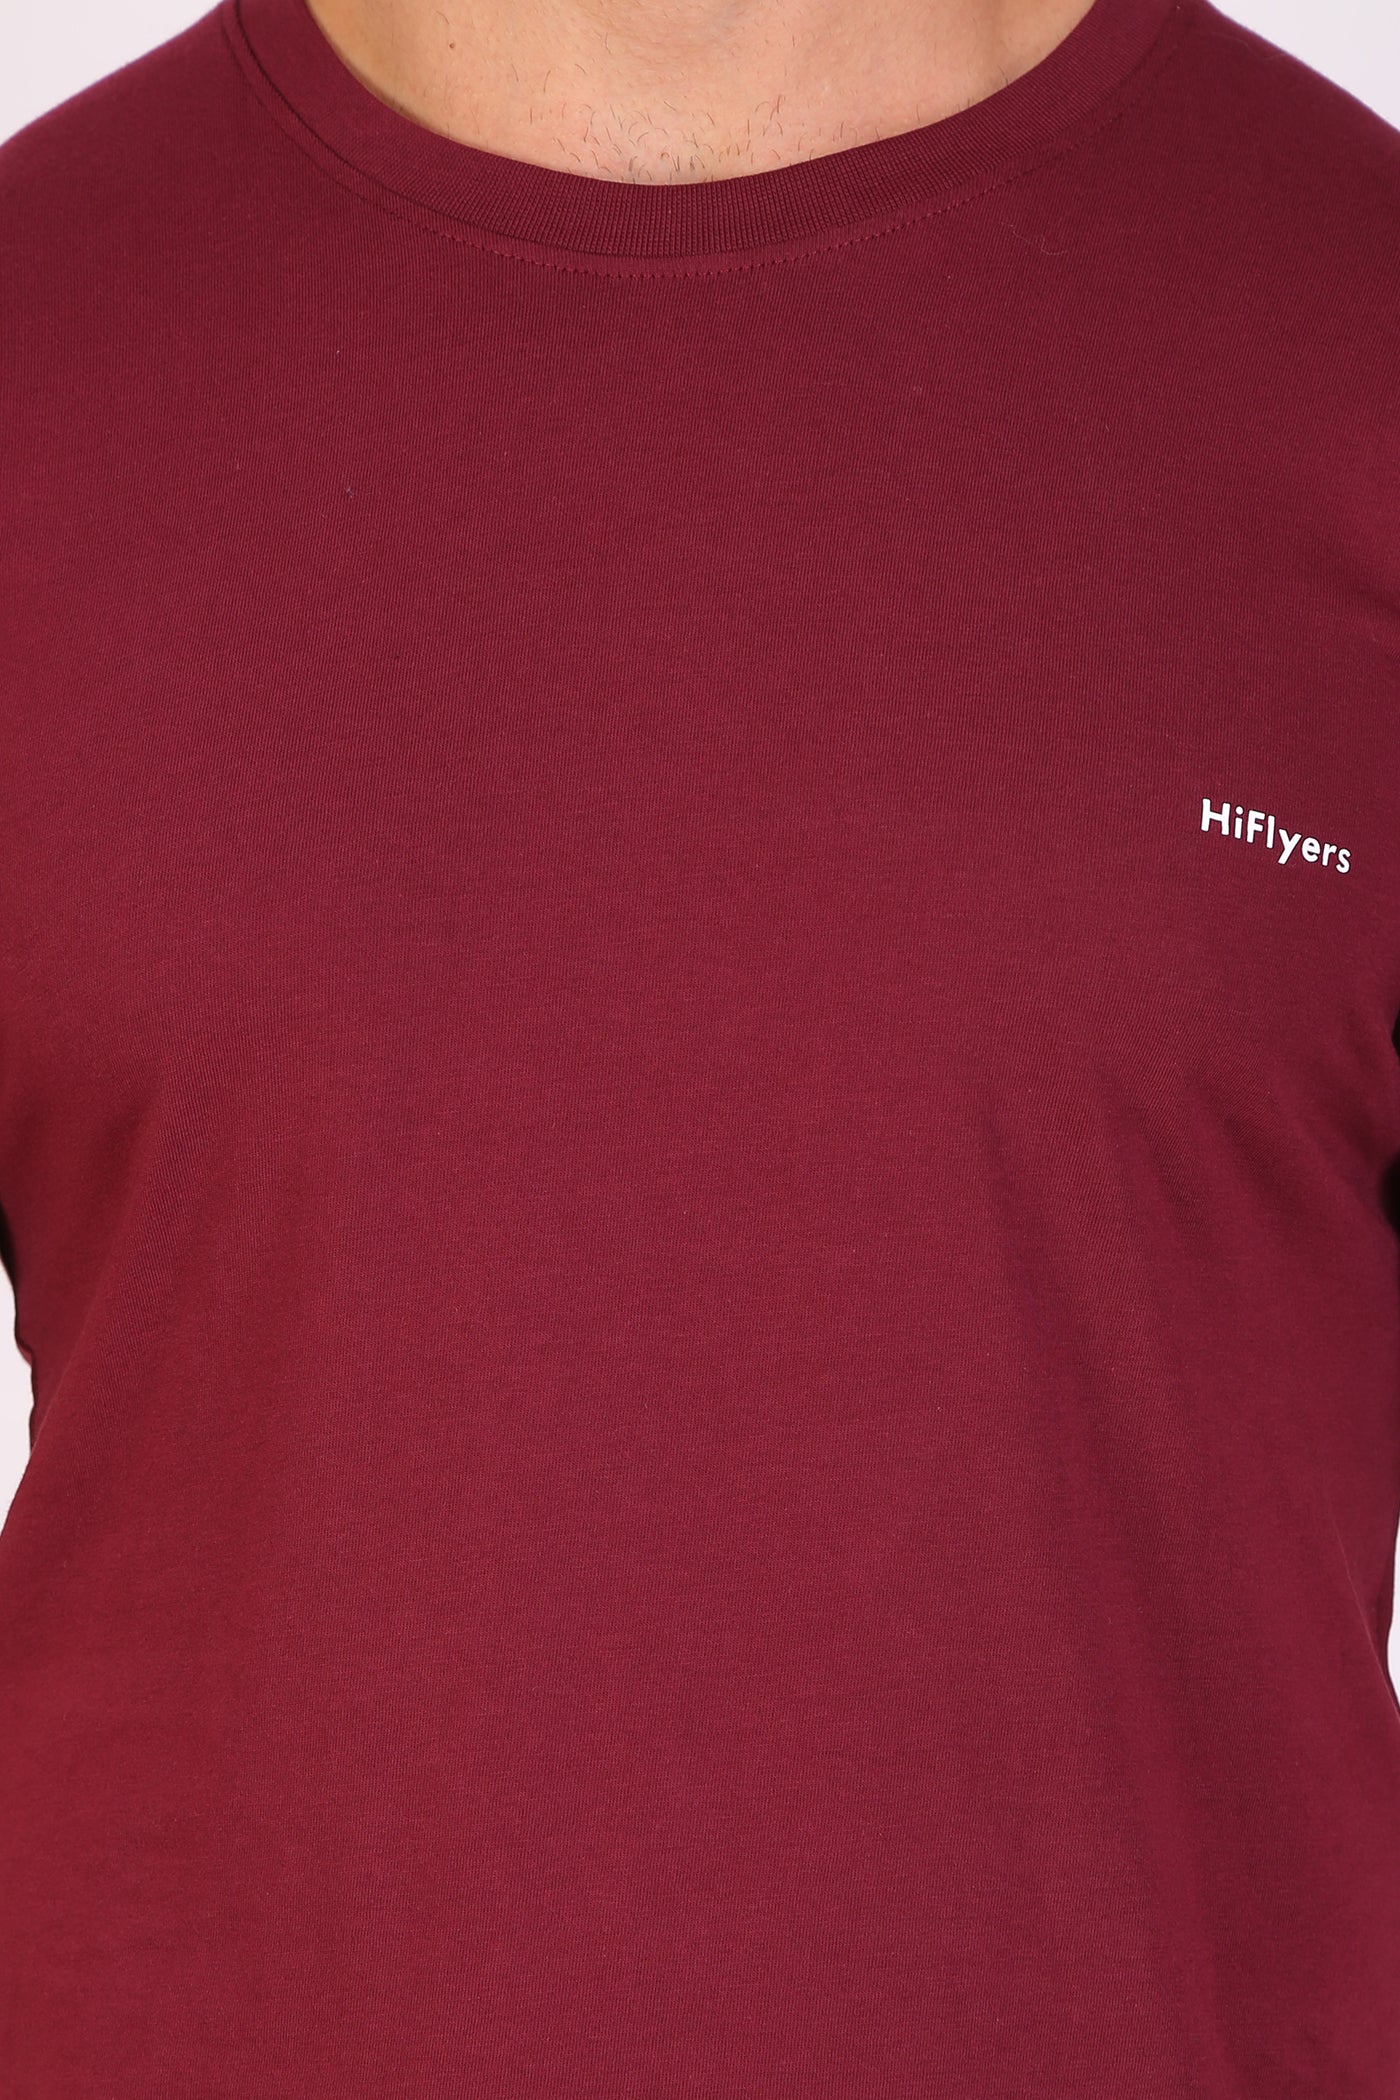 HiFlyers Men Slim Fit Solid Premium Rn Tshirts Maroon